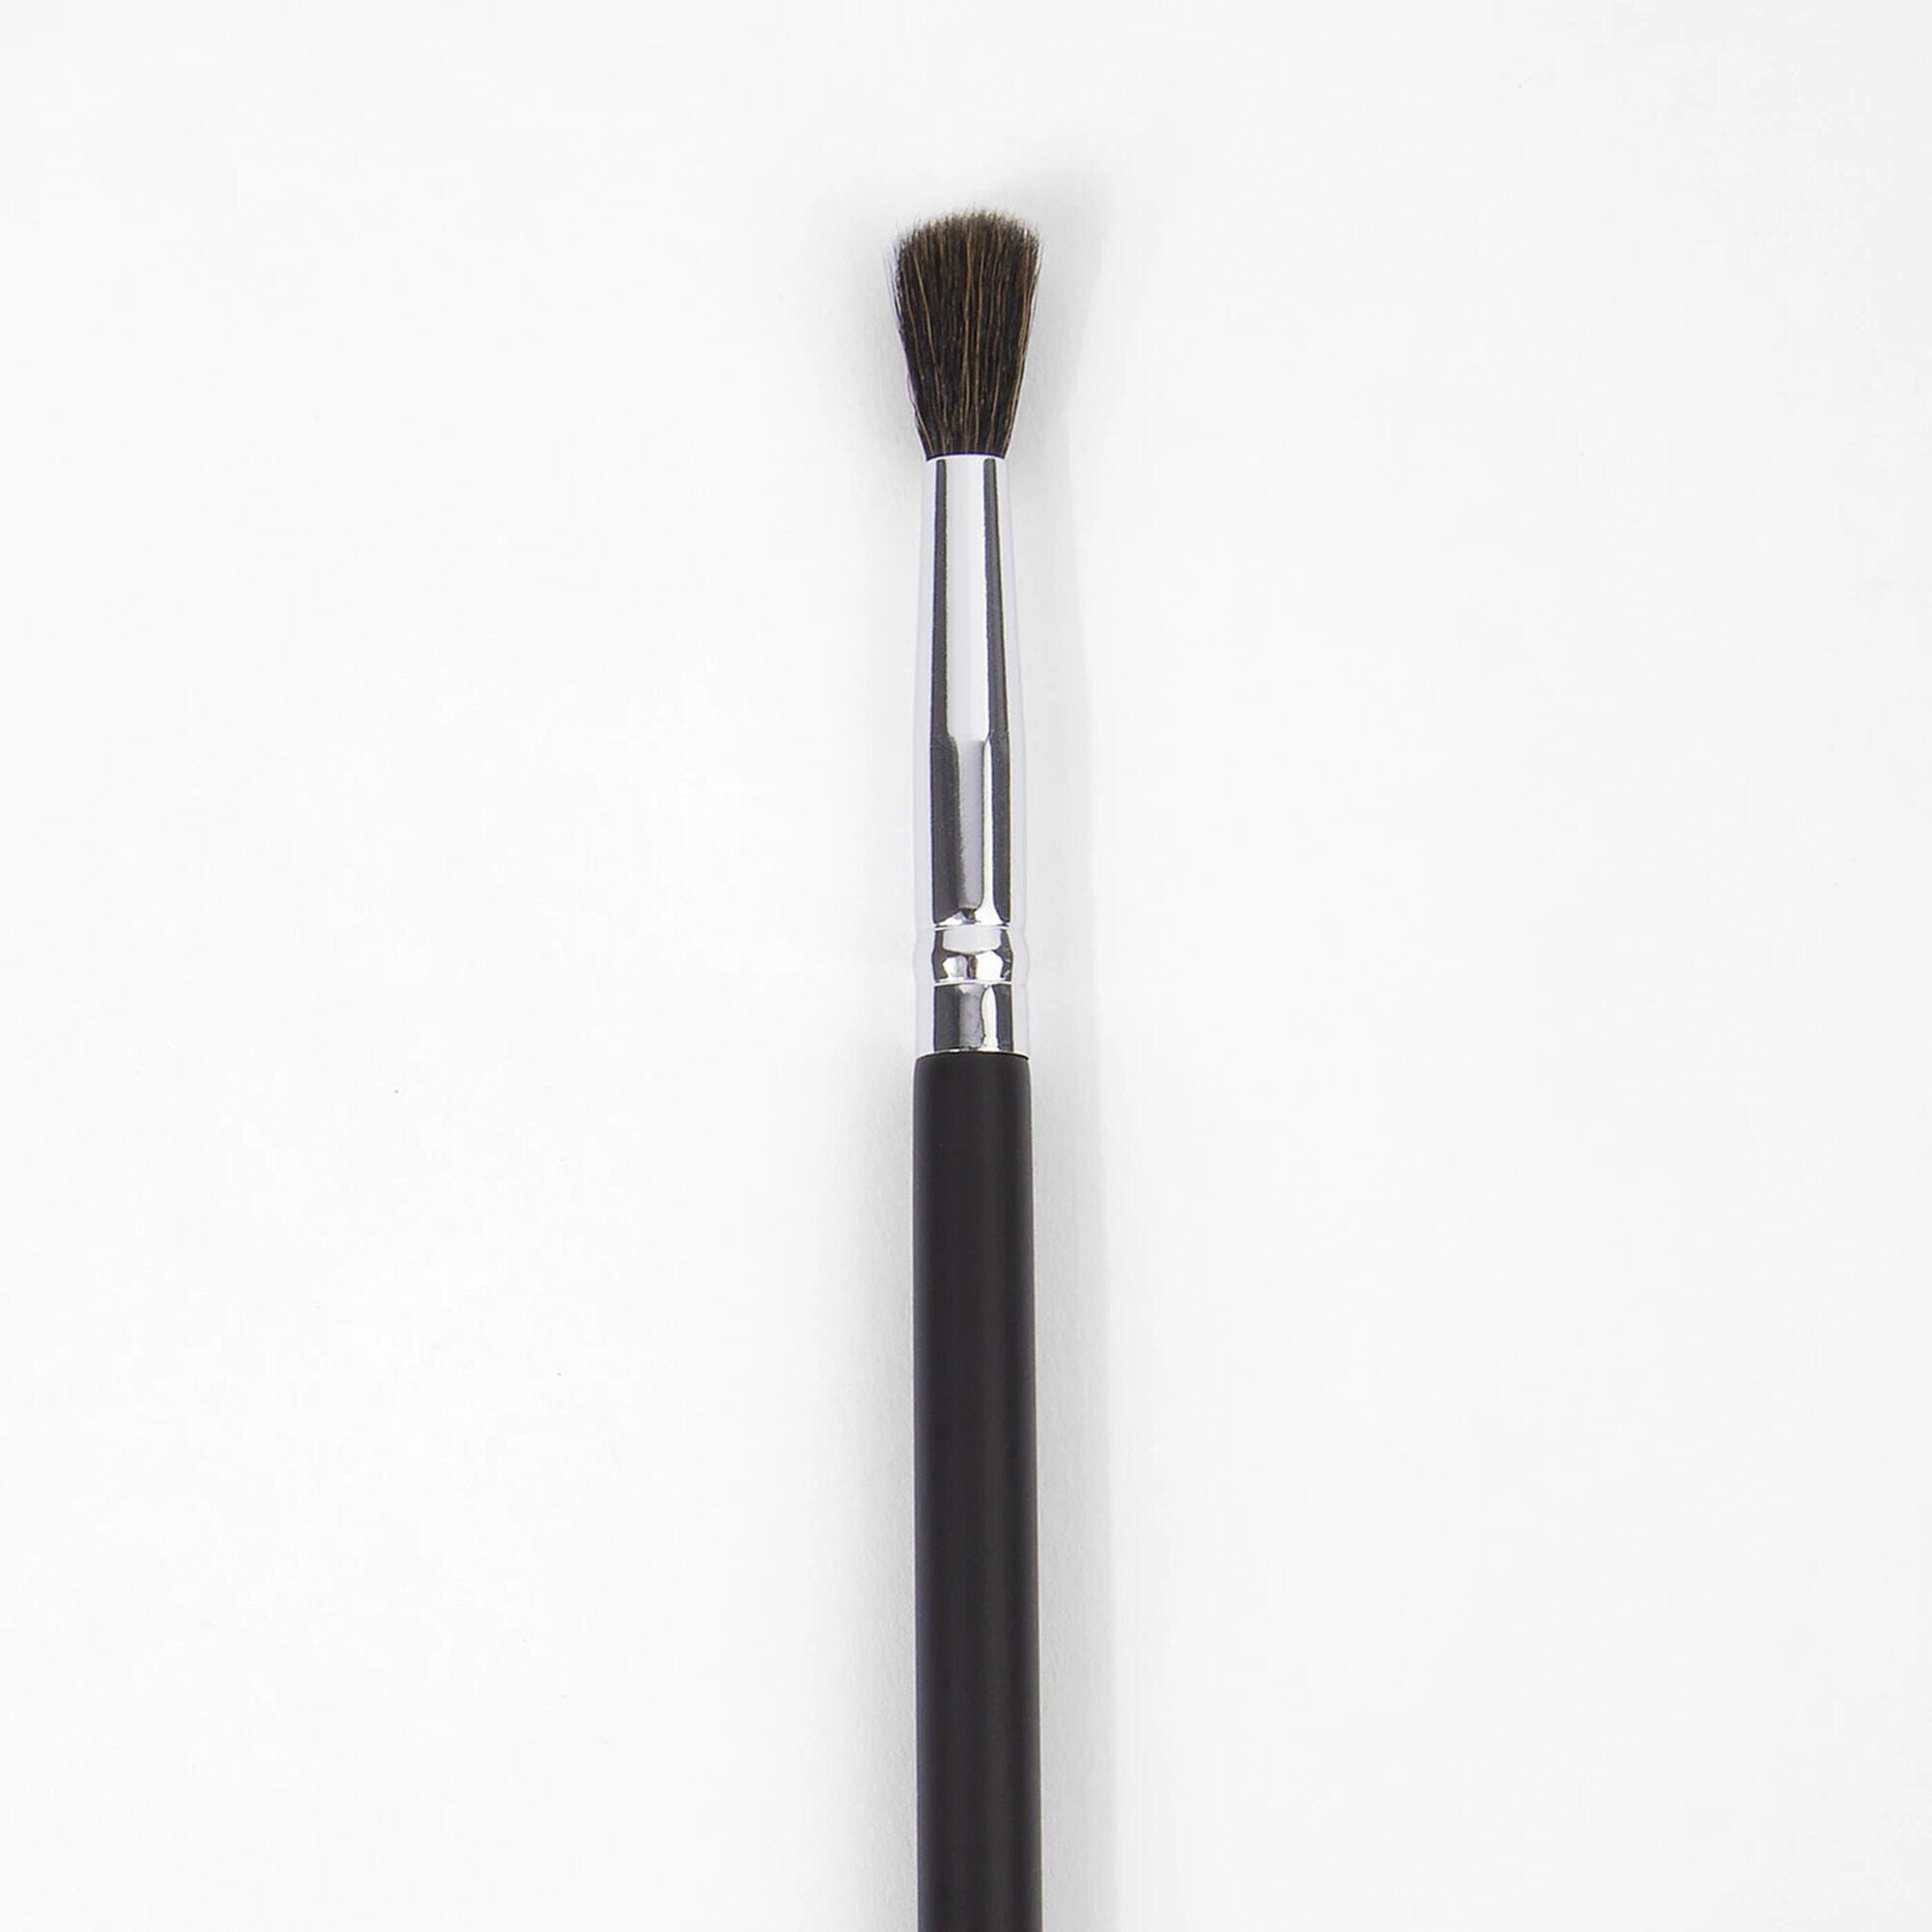 M504 - Large Pointed Blender Eyeshadow Brush